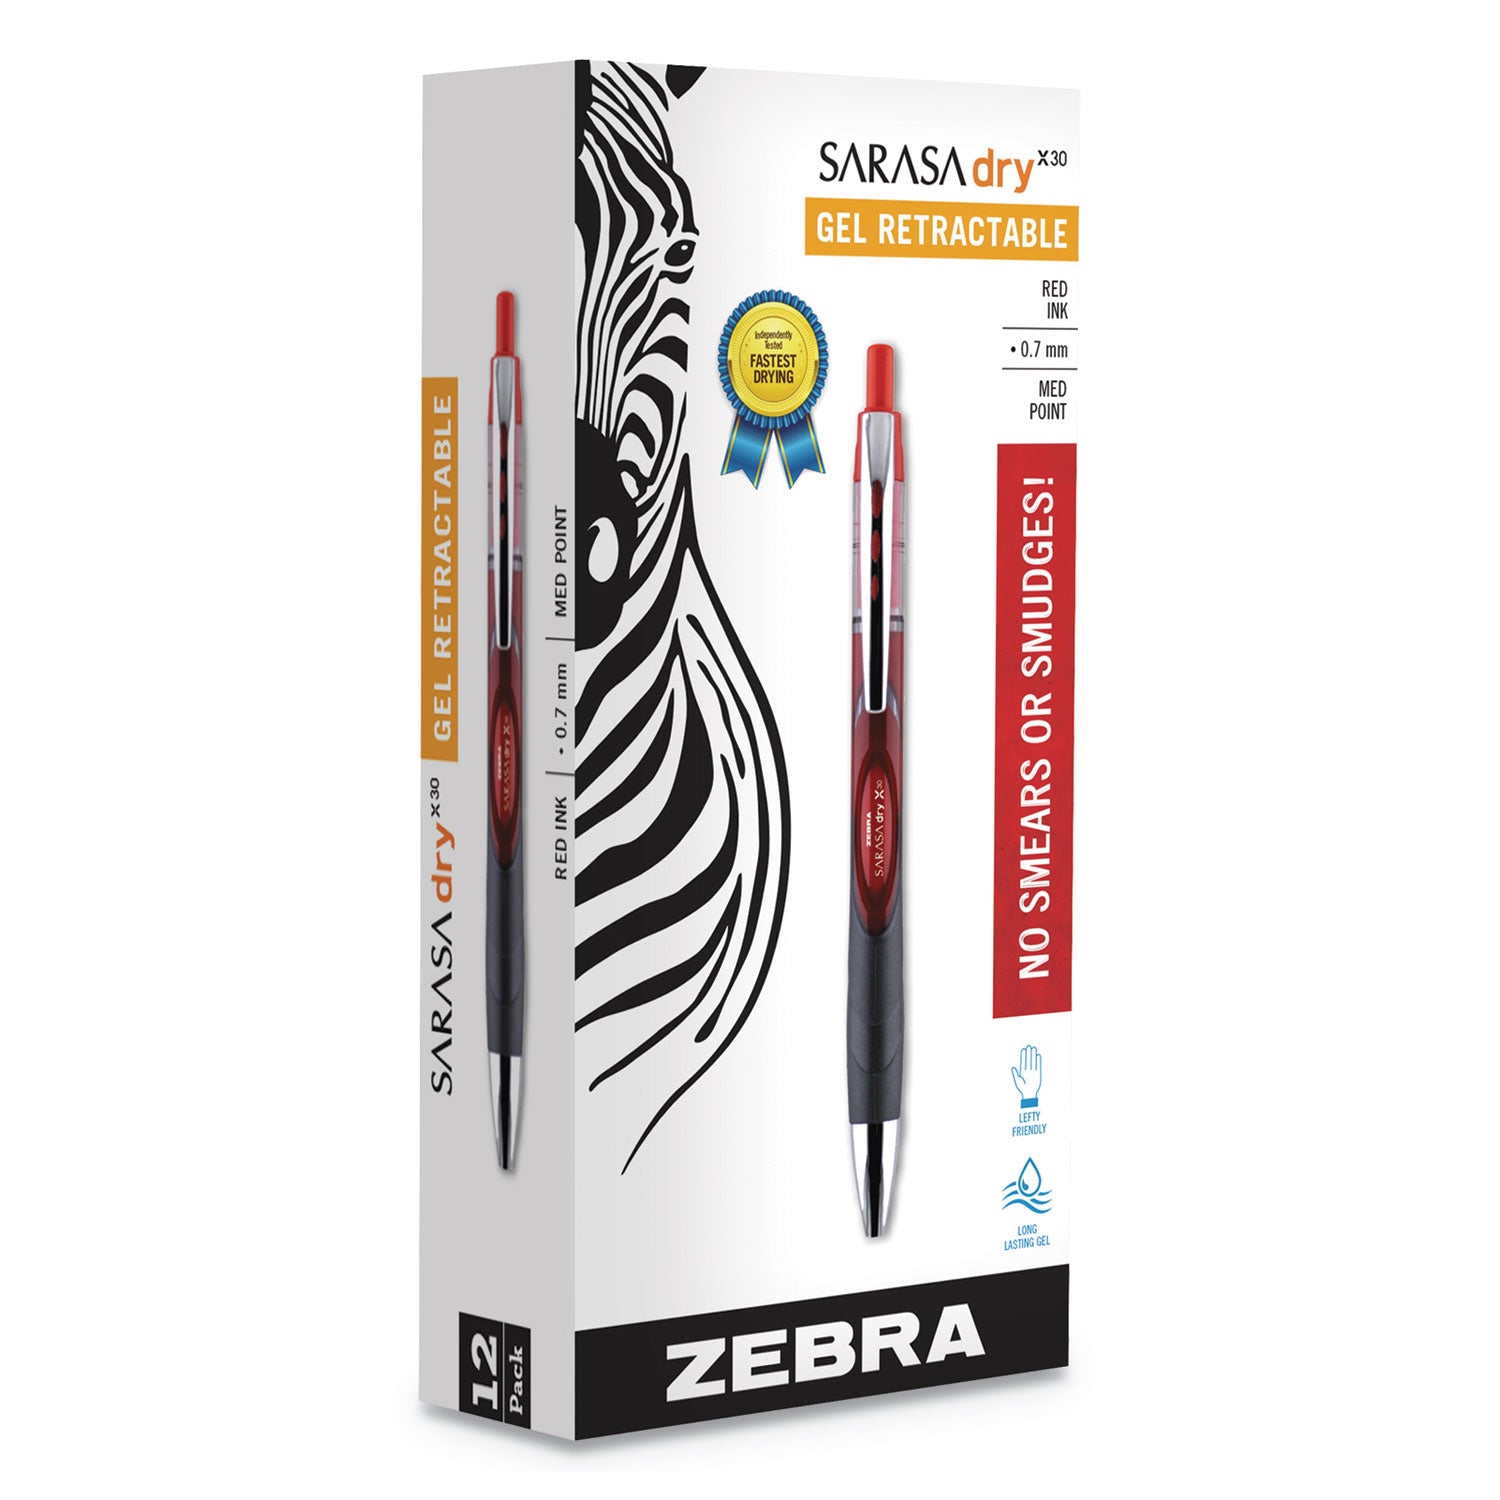 sarasa-dry-gel-x30-gel-pen-retractable-medium-07-mm-red-ink-red-black-silver-barrel-12-pack_zeb47130 - 2